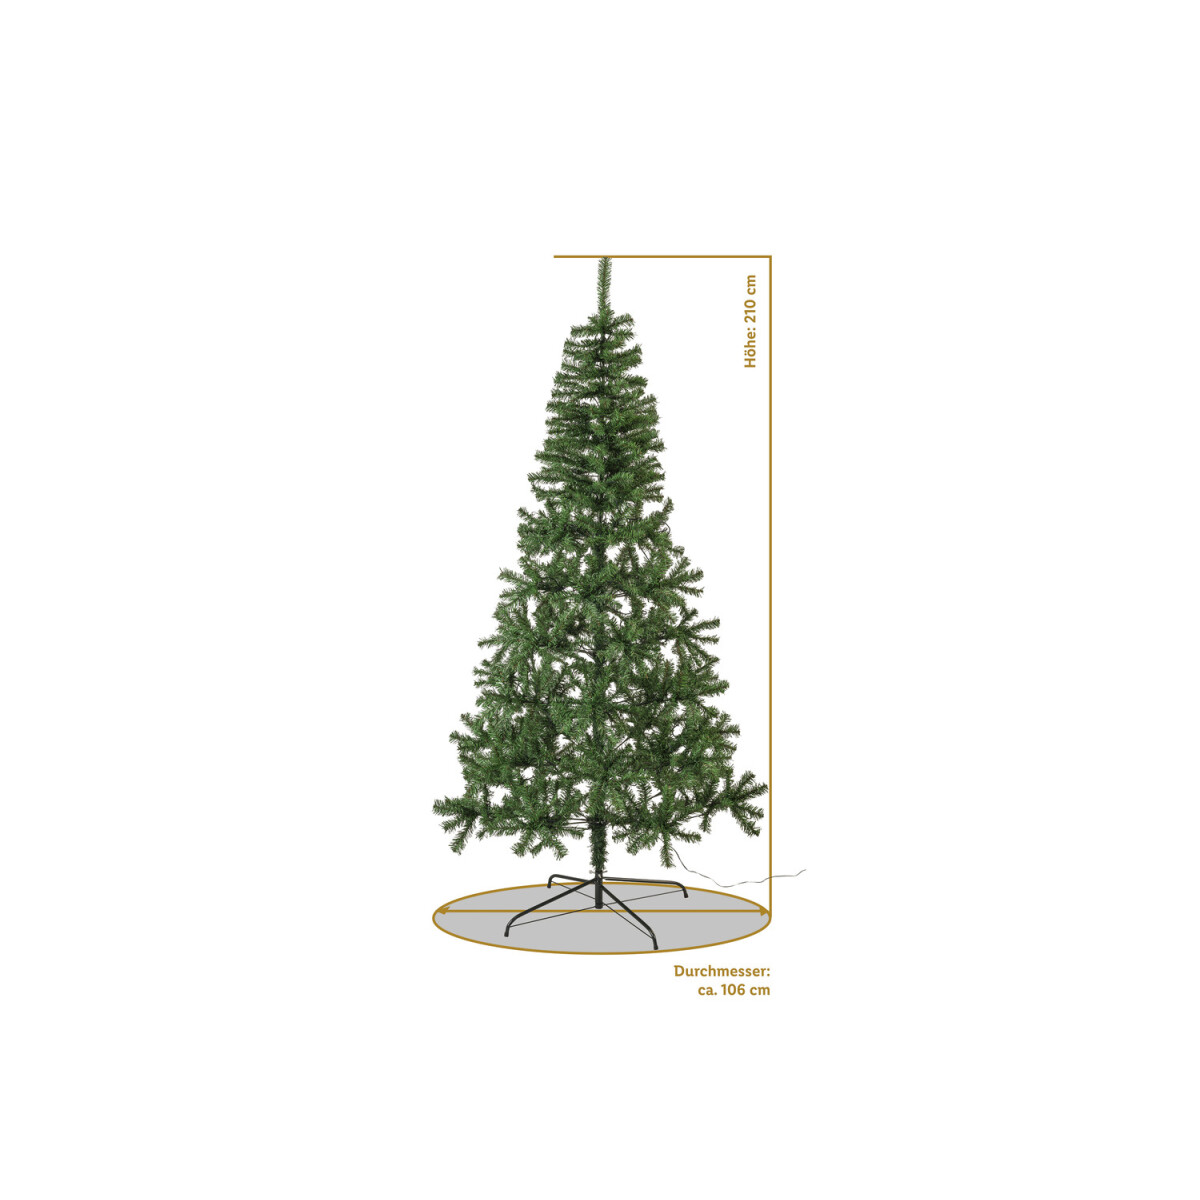 € B-Ware neuwertig, LED-Weihnachtsbaum, home LEDs, cm LIVARNO 210 27,99 - 180 H